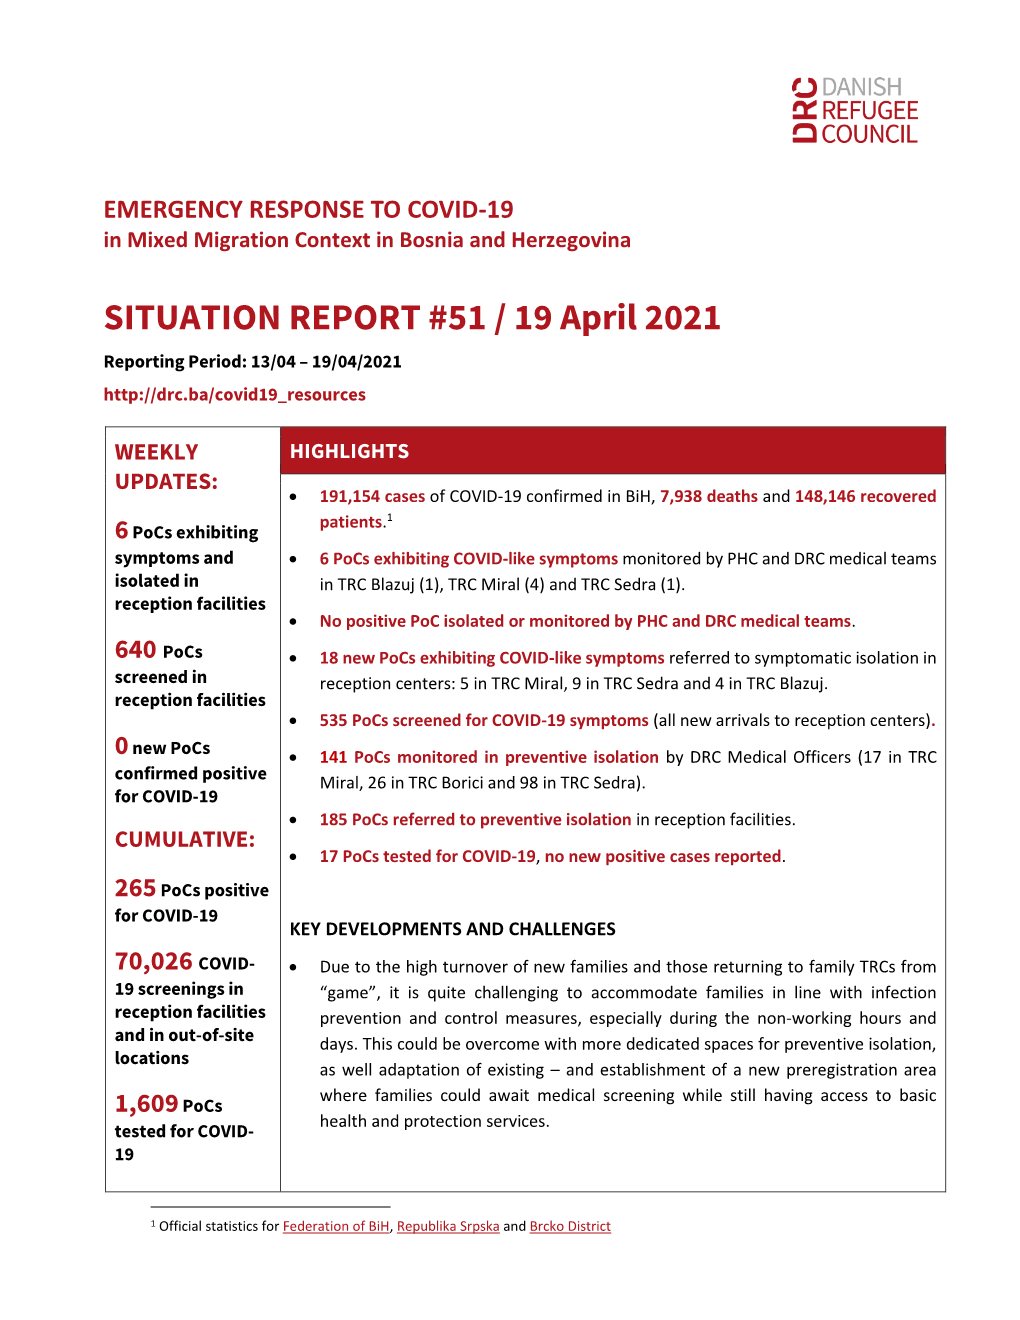 SITUATION REPORT #51 / 19 April 2021 Reporting Period: 13/04 – 19/04/2021